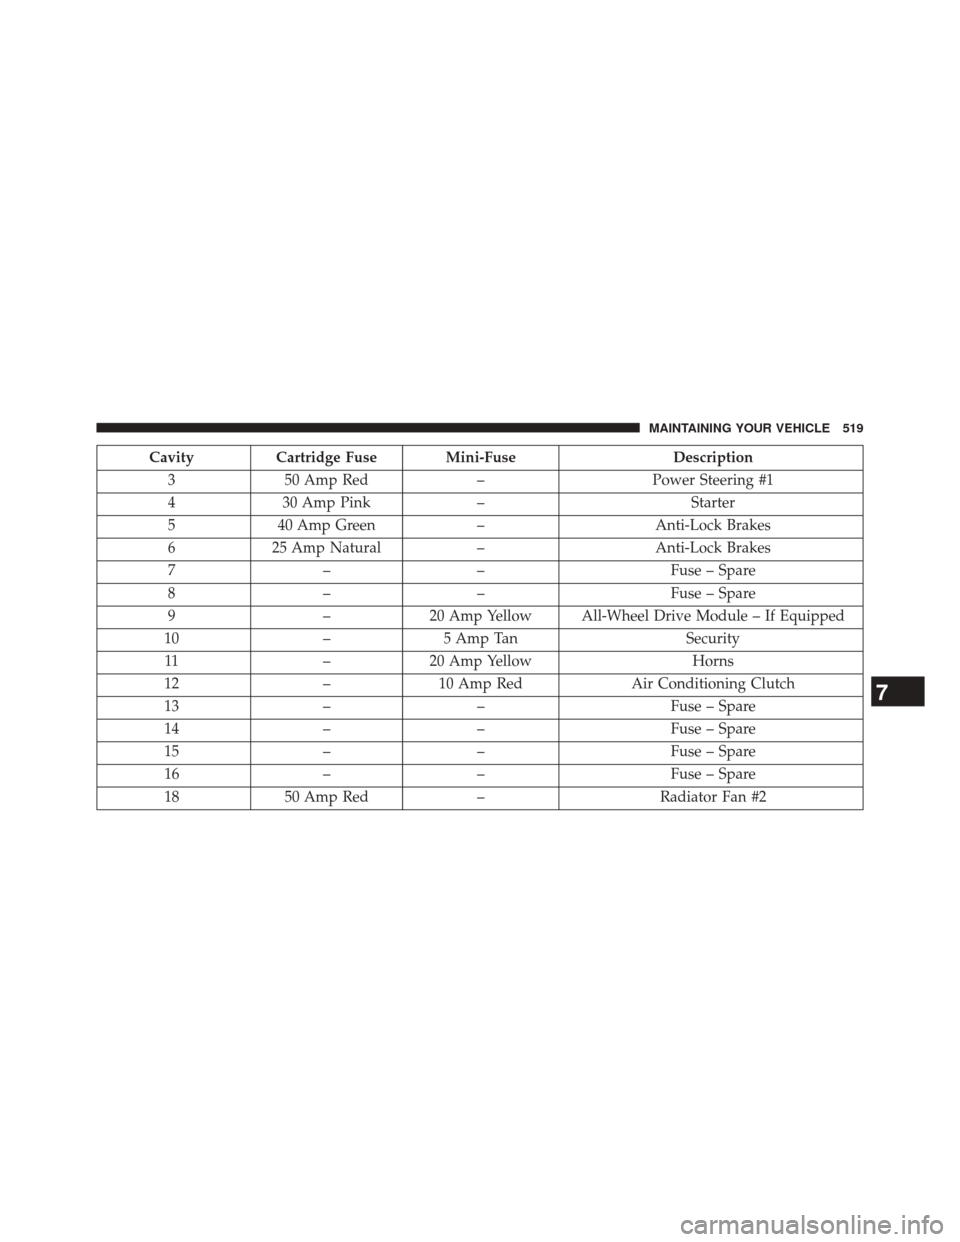 CHRYSLER 300 SRT 2014 2.G Owners Manual CavityCartridge Fuse Mini-Fuse Description
3 50 Amp Red –Power Steering #1
4 30 Amp Pink – Starter
5 40 Amp Green –Anti-Lock Brakes
6 25 Amp Natural –Anti-Lock Brakes
7 –– Fuse – Spare
8